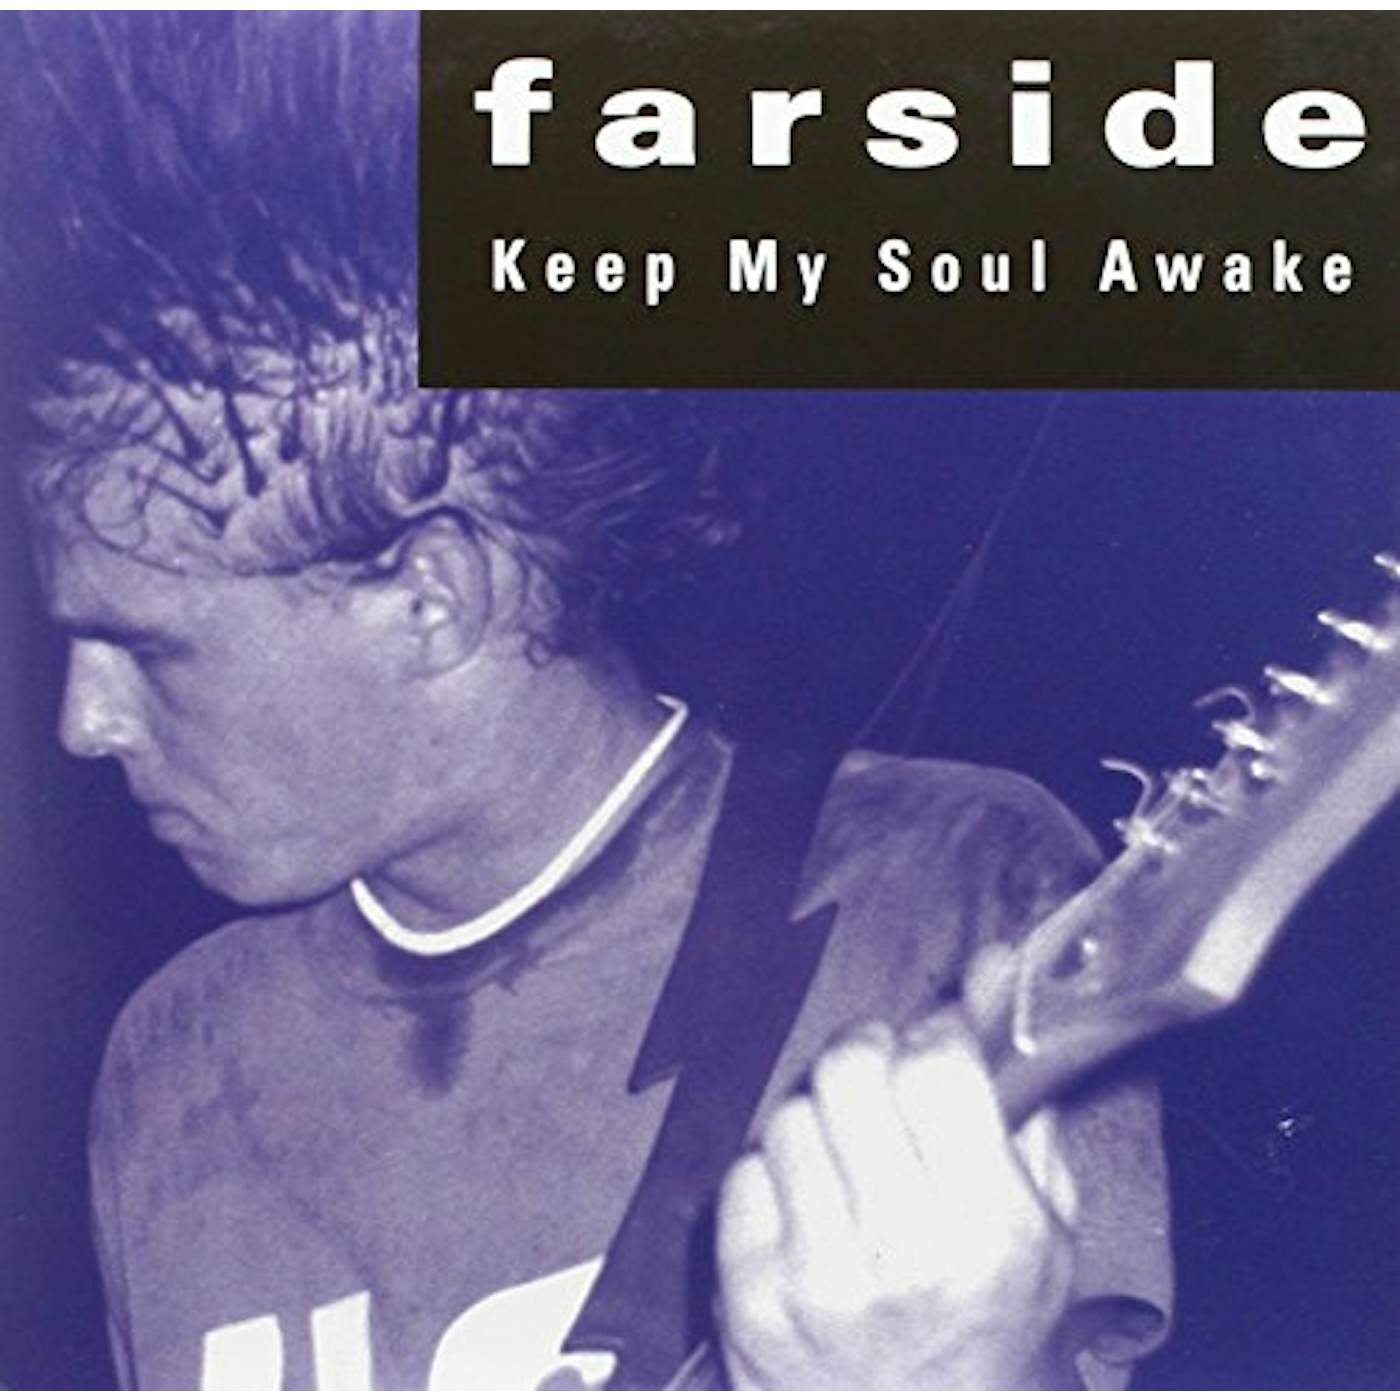 Farside Keep My Soul Awake Vinyl Record